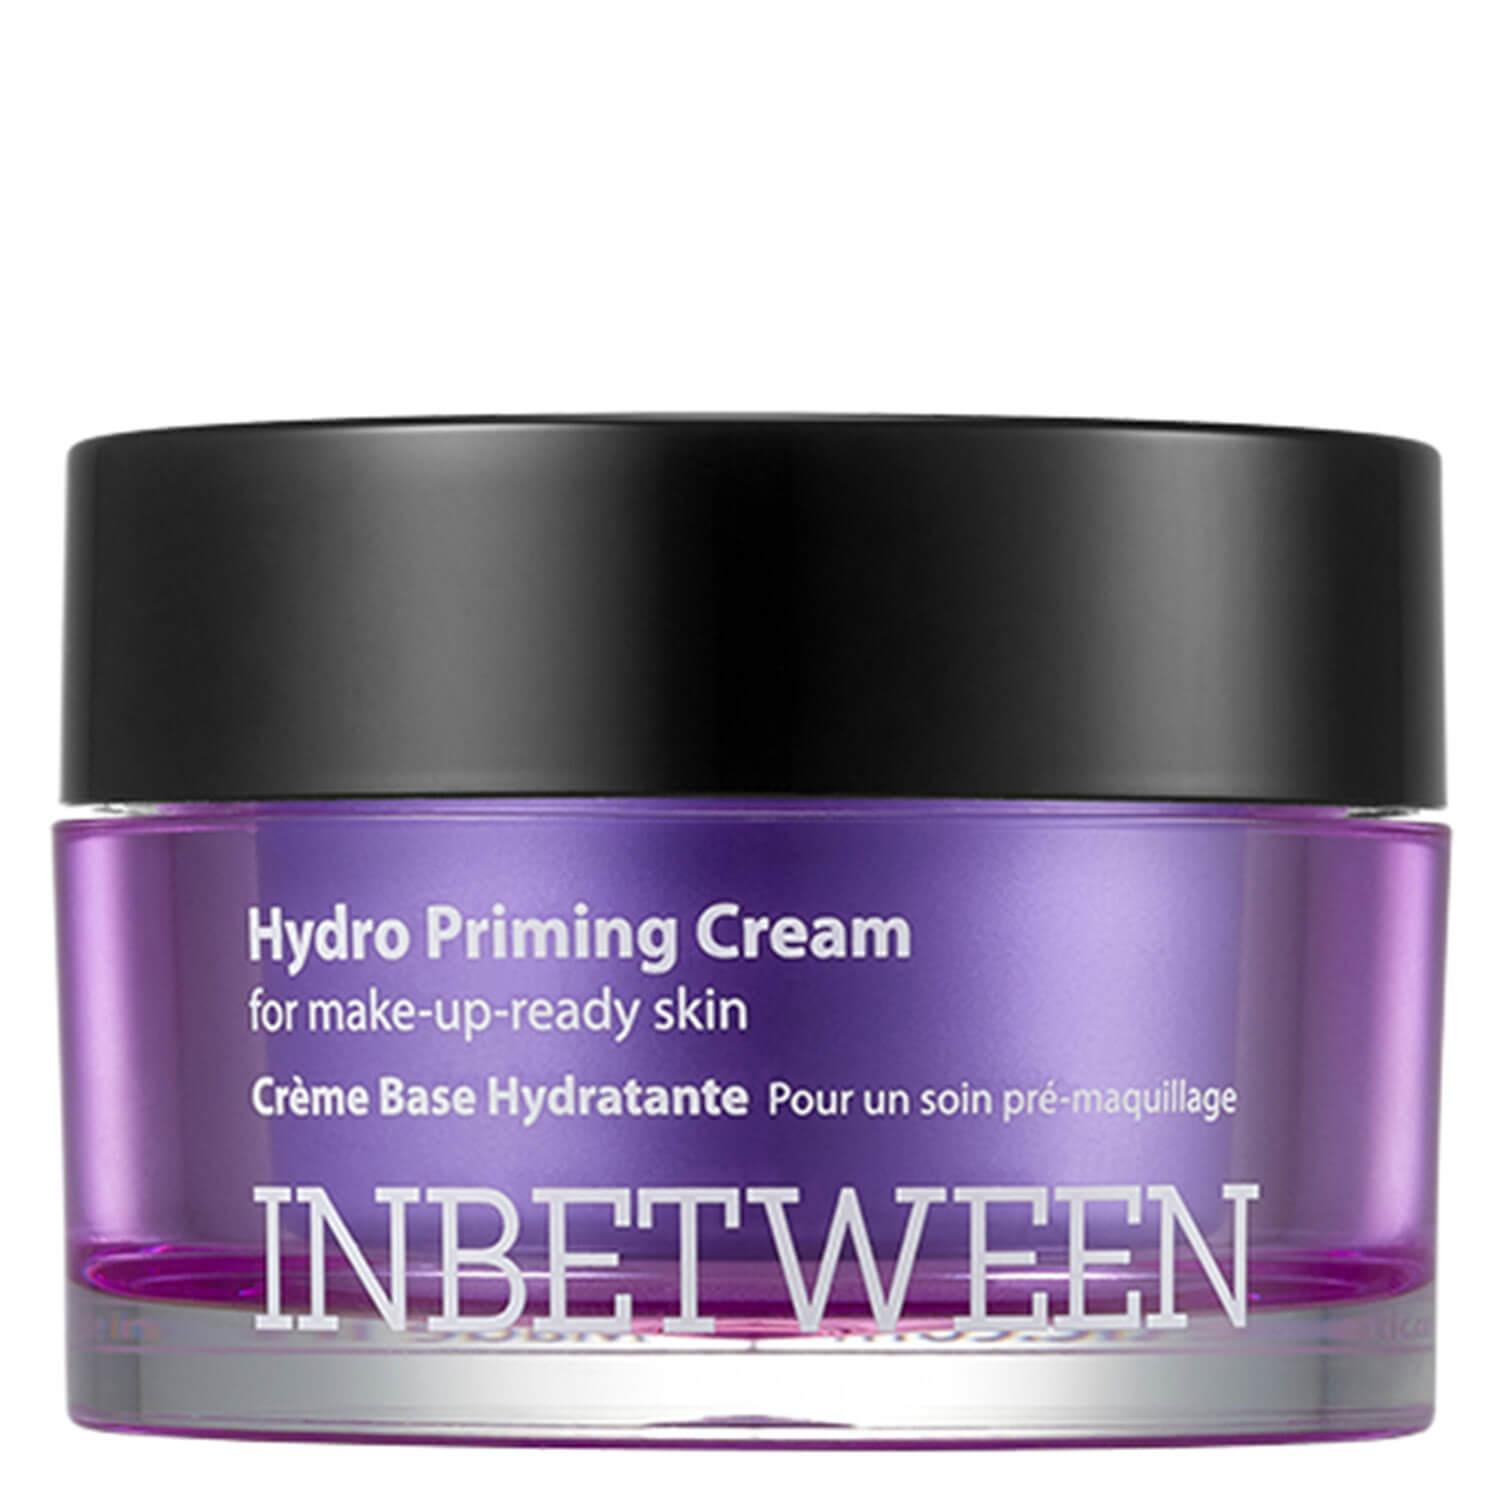 Blithe - Hydro Priming Cream